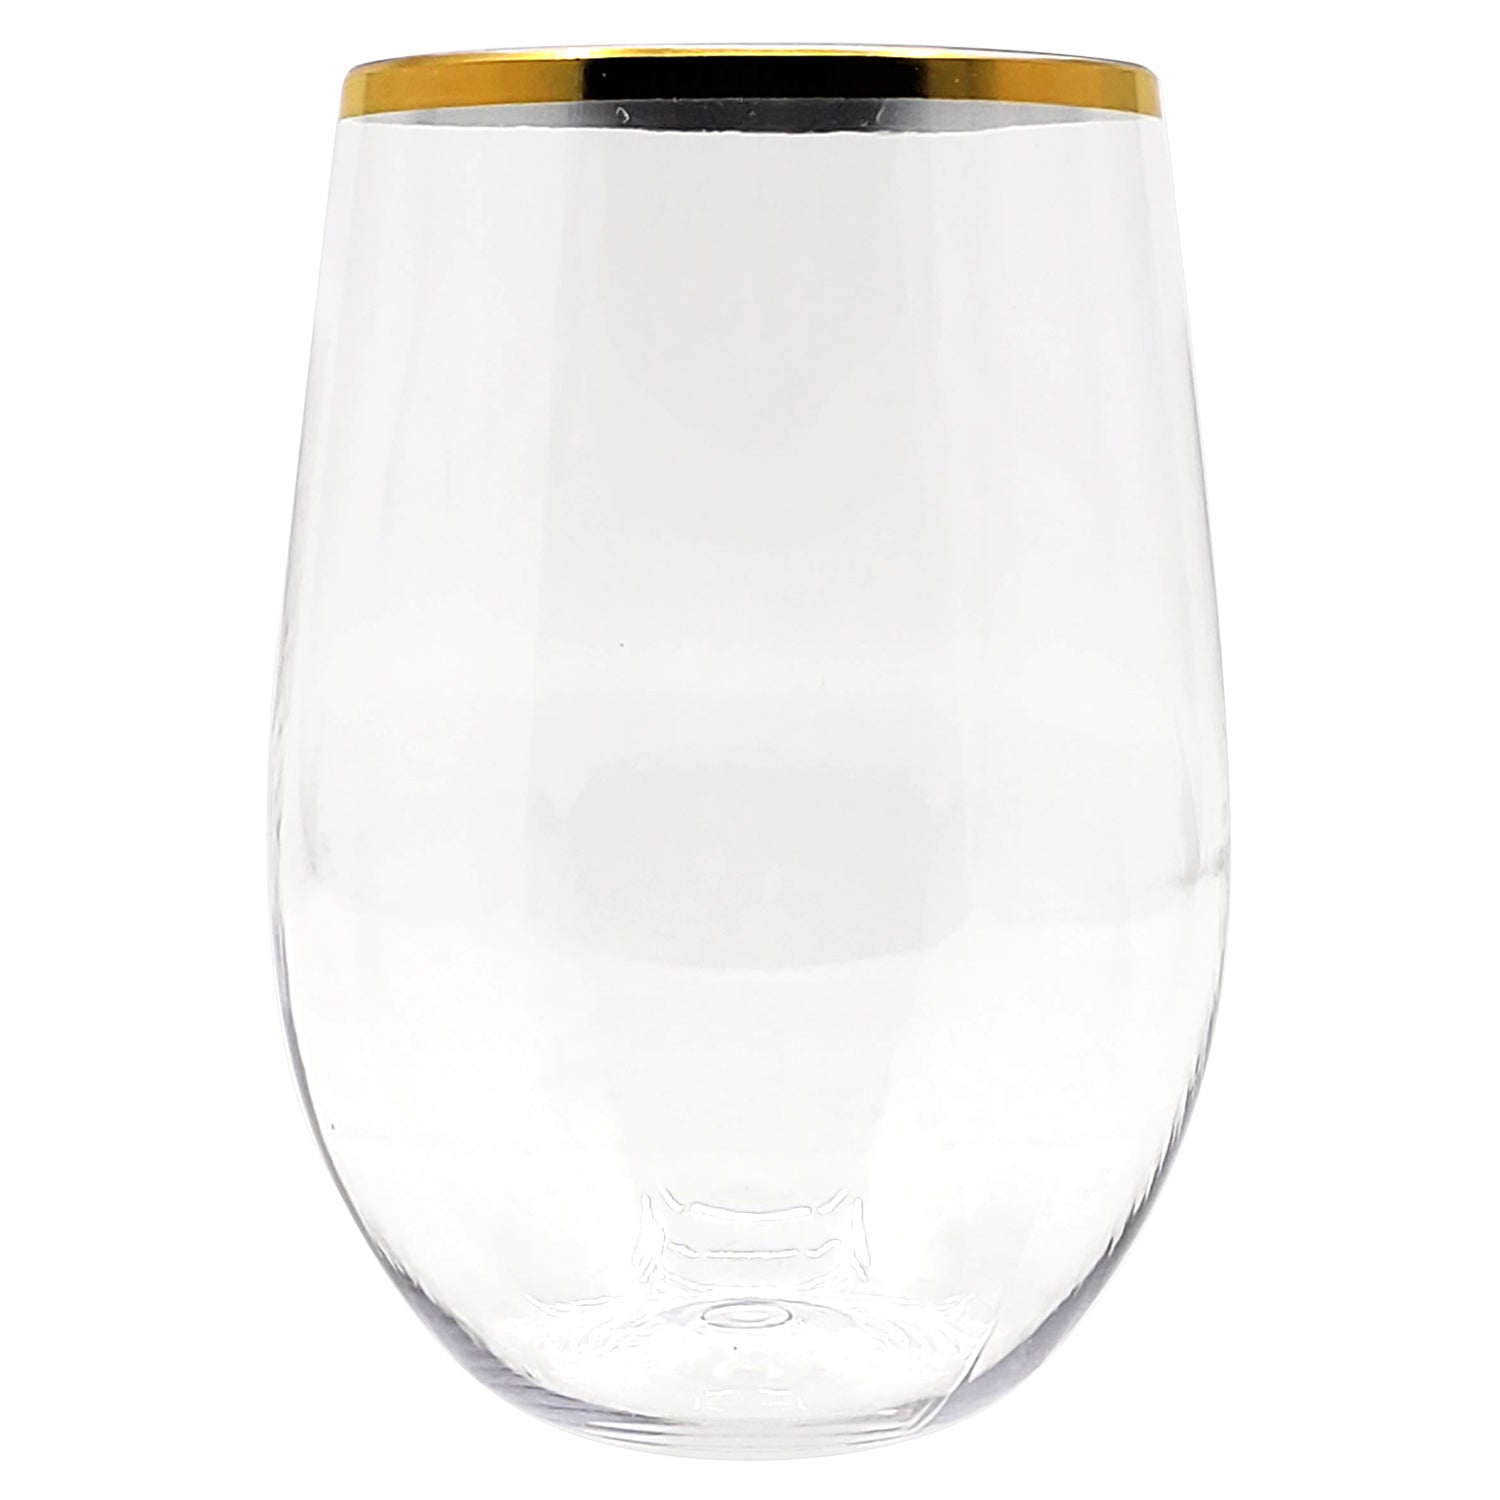 Disposable Plastic Wine Cups - 6 per pack